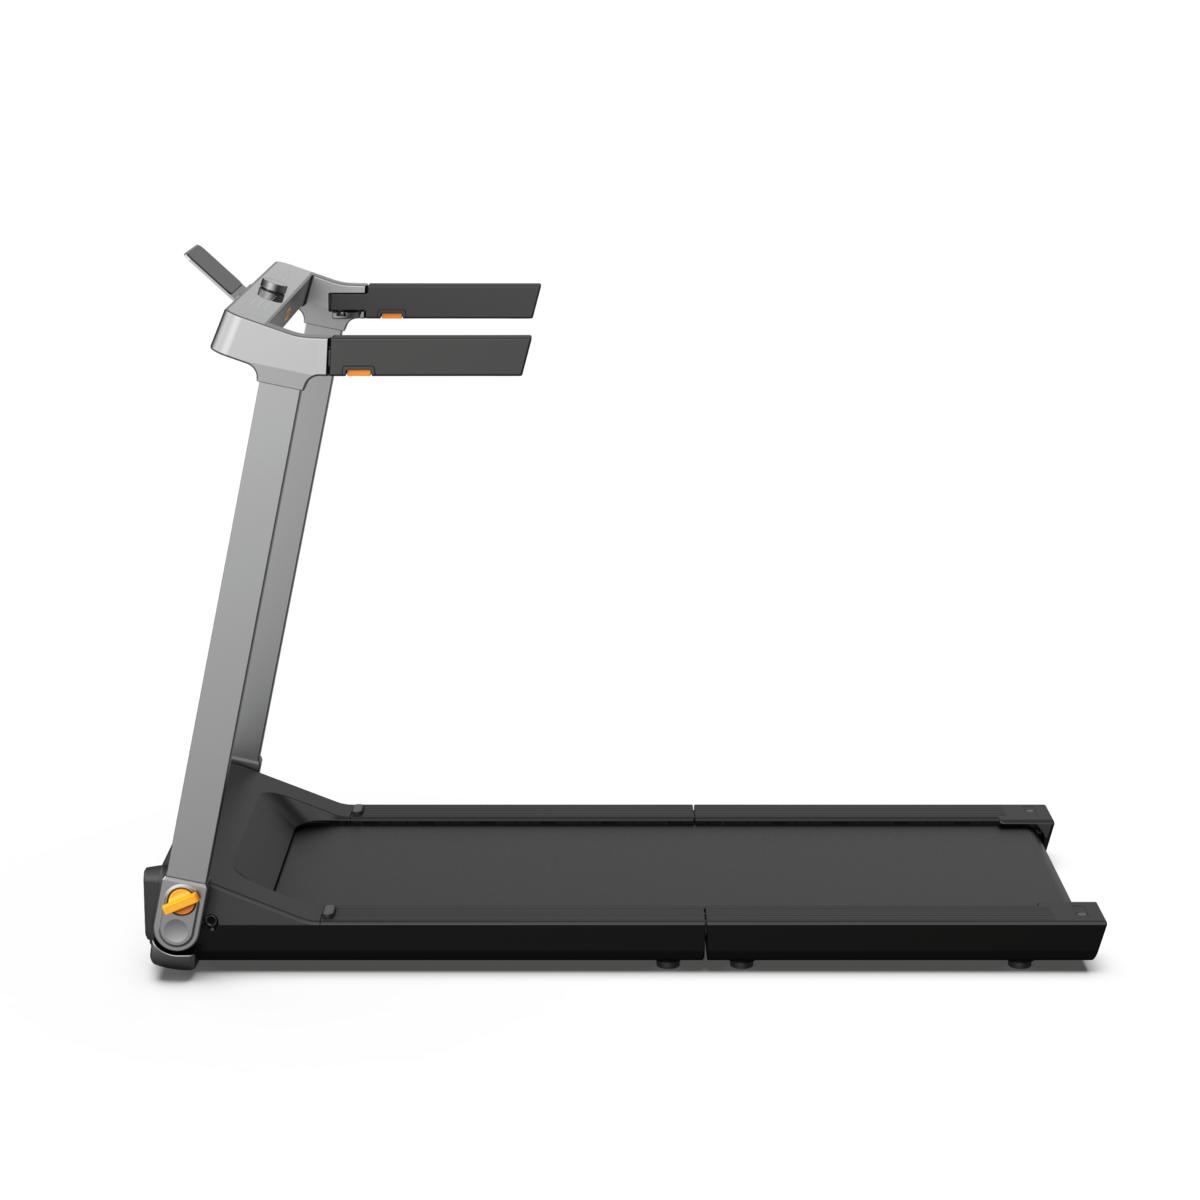 Kingsmith Walking Pad Treadmill G1 klappbares Laufband